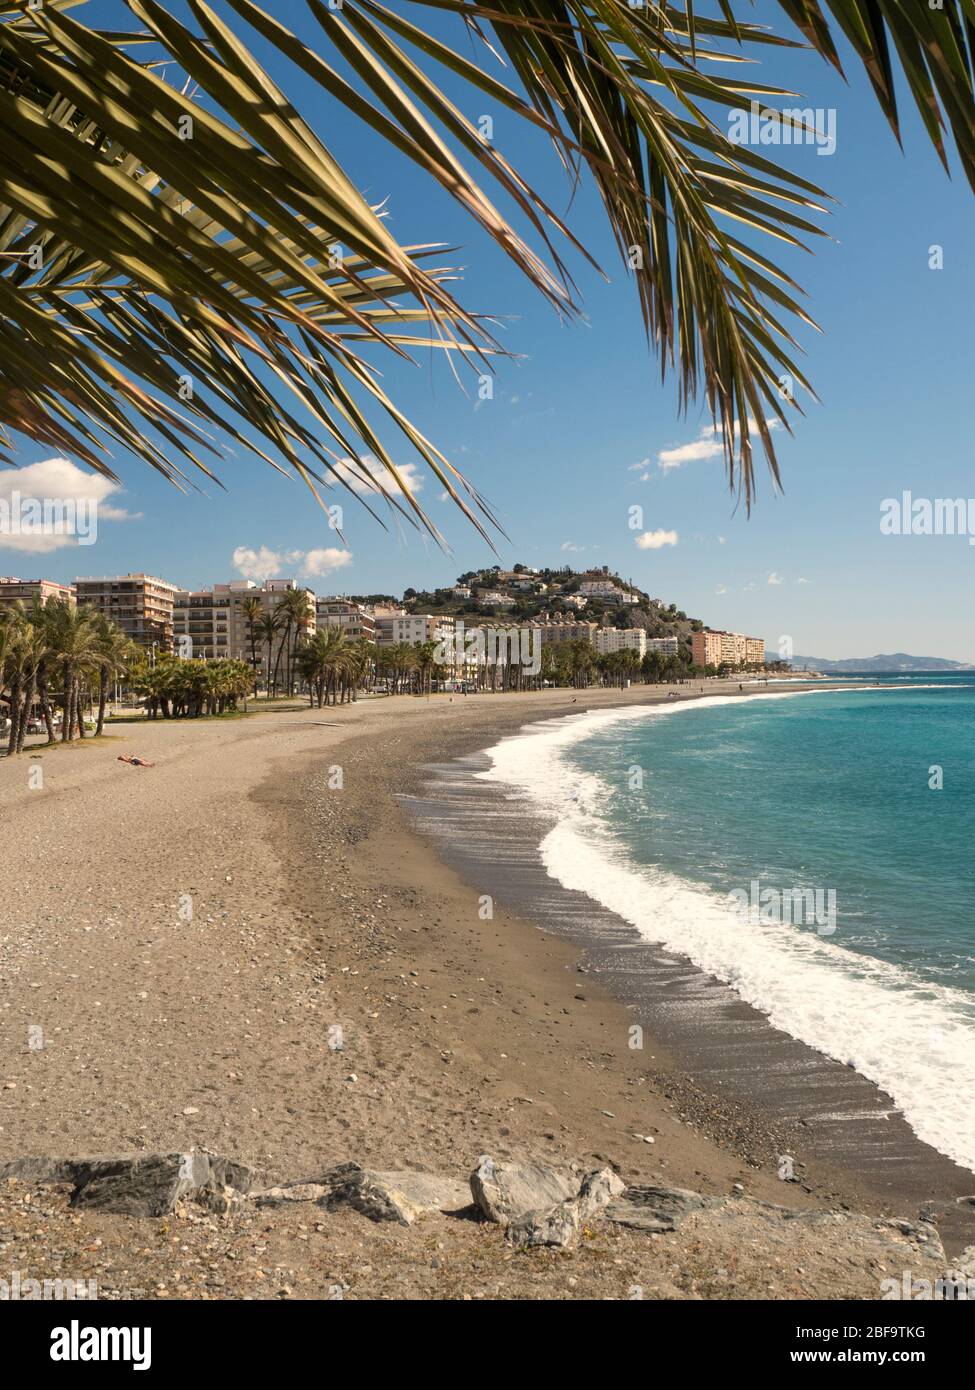 Beach scene on Mediterranean coast at Almuncar, Spain Stock Photo